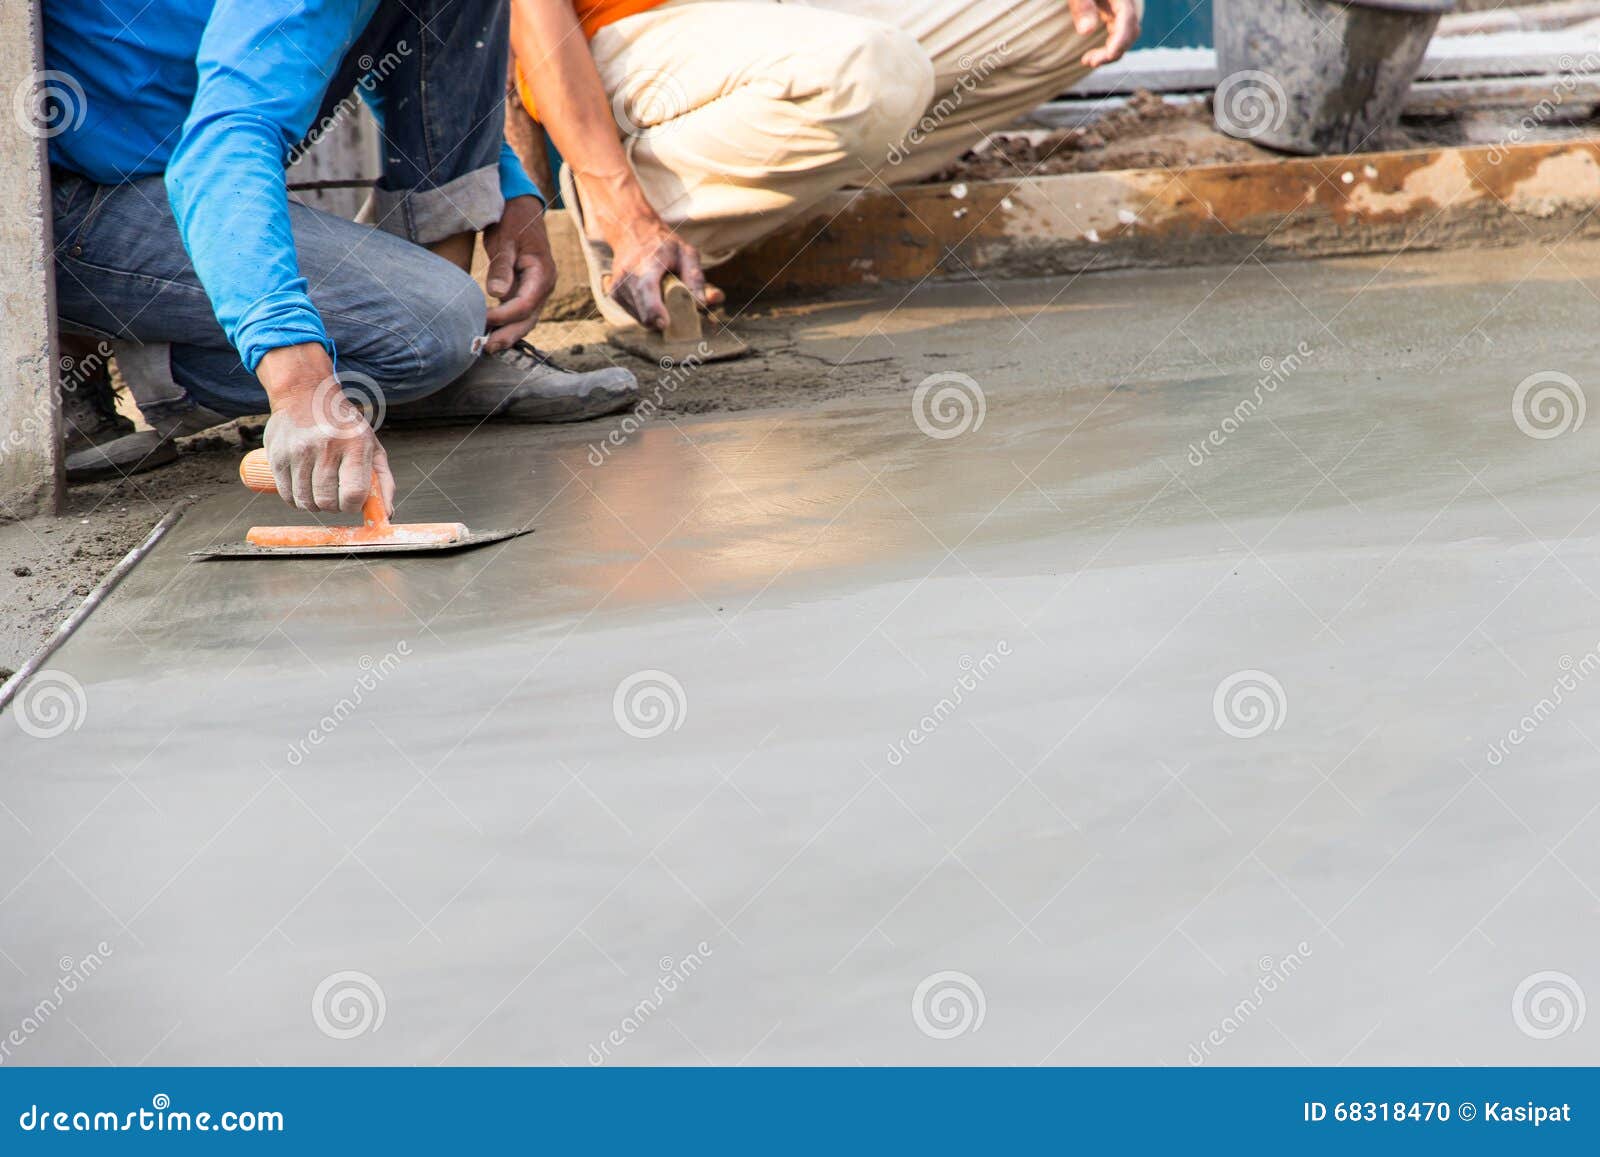 Floor plaster cement stock photo. Image of architecture - 68318470